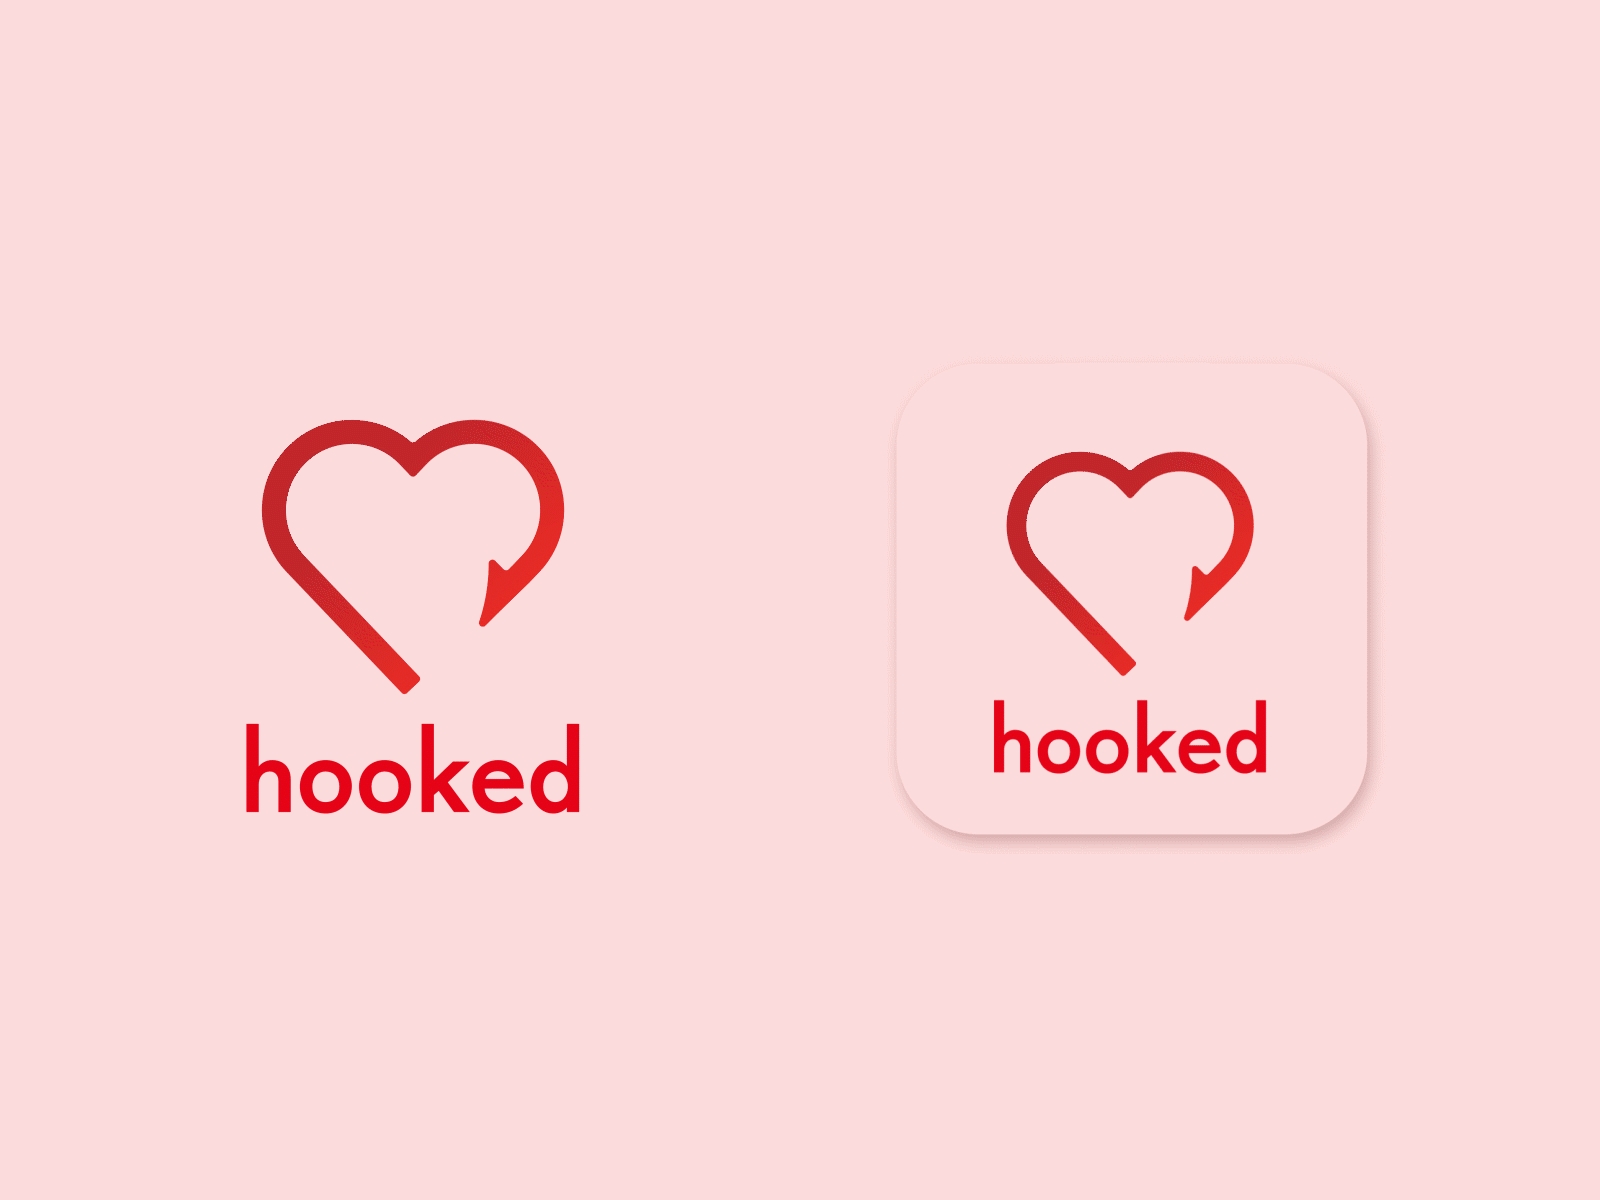 Spark speed dating app worldwide | Logo design contest | 99designs